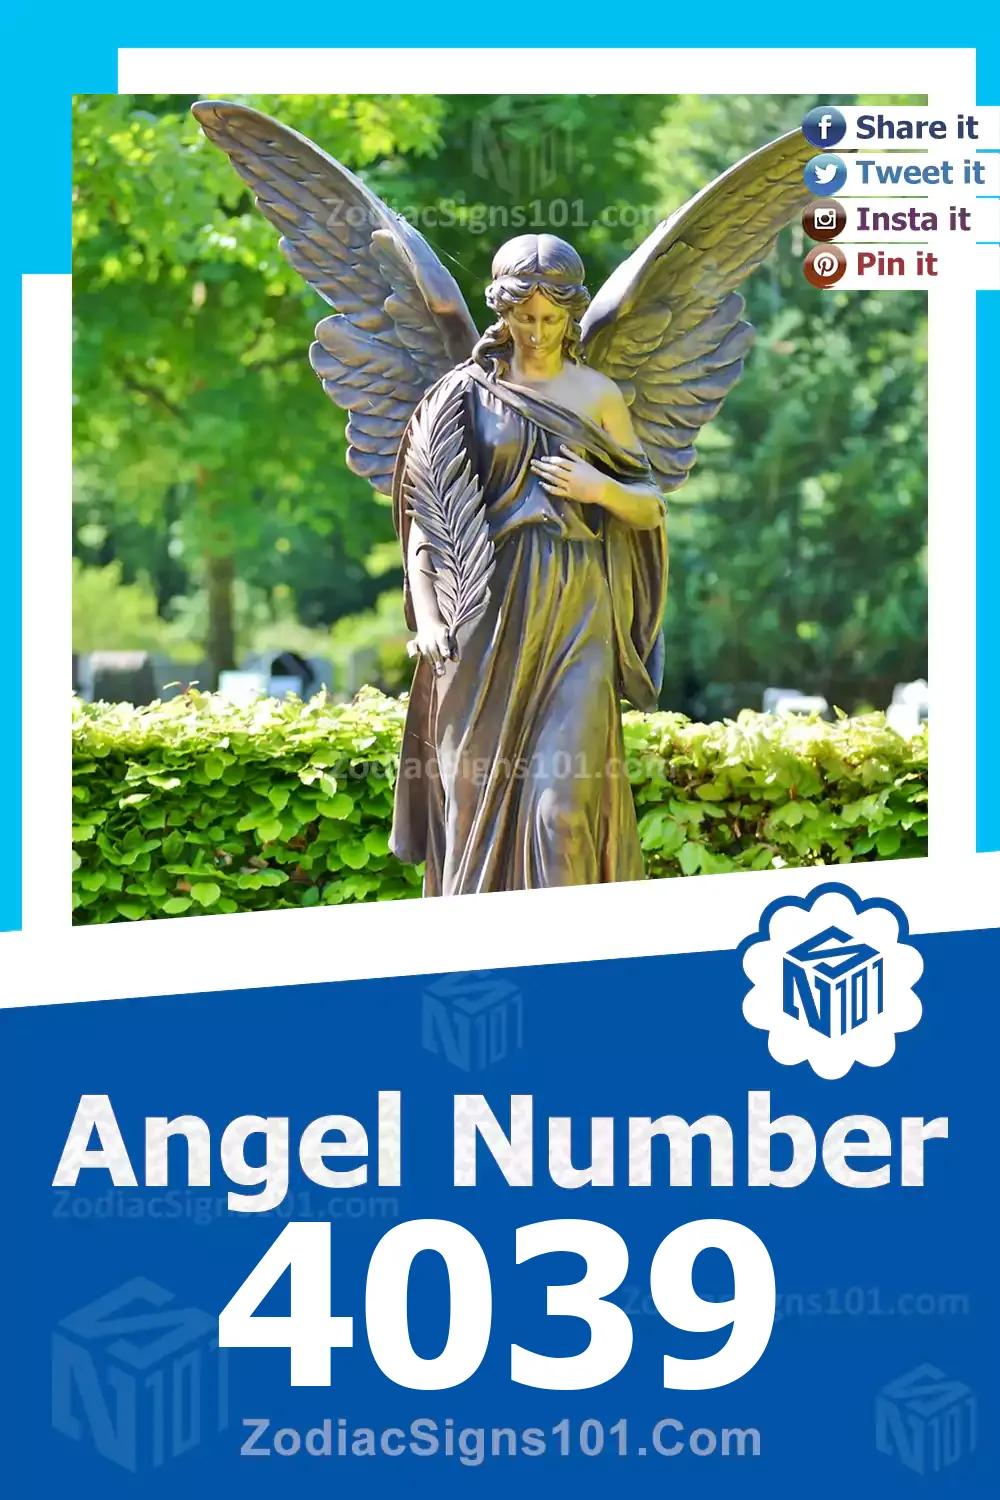 4039-Angel-Number-Meaning.jpg